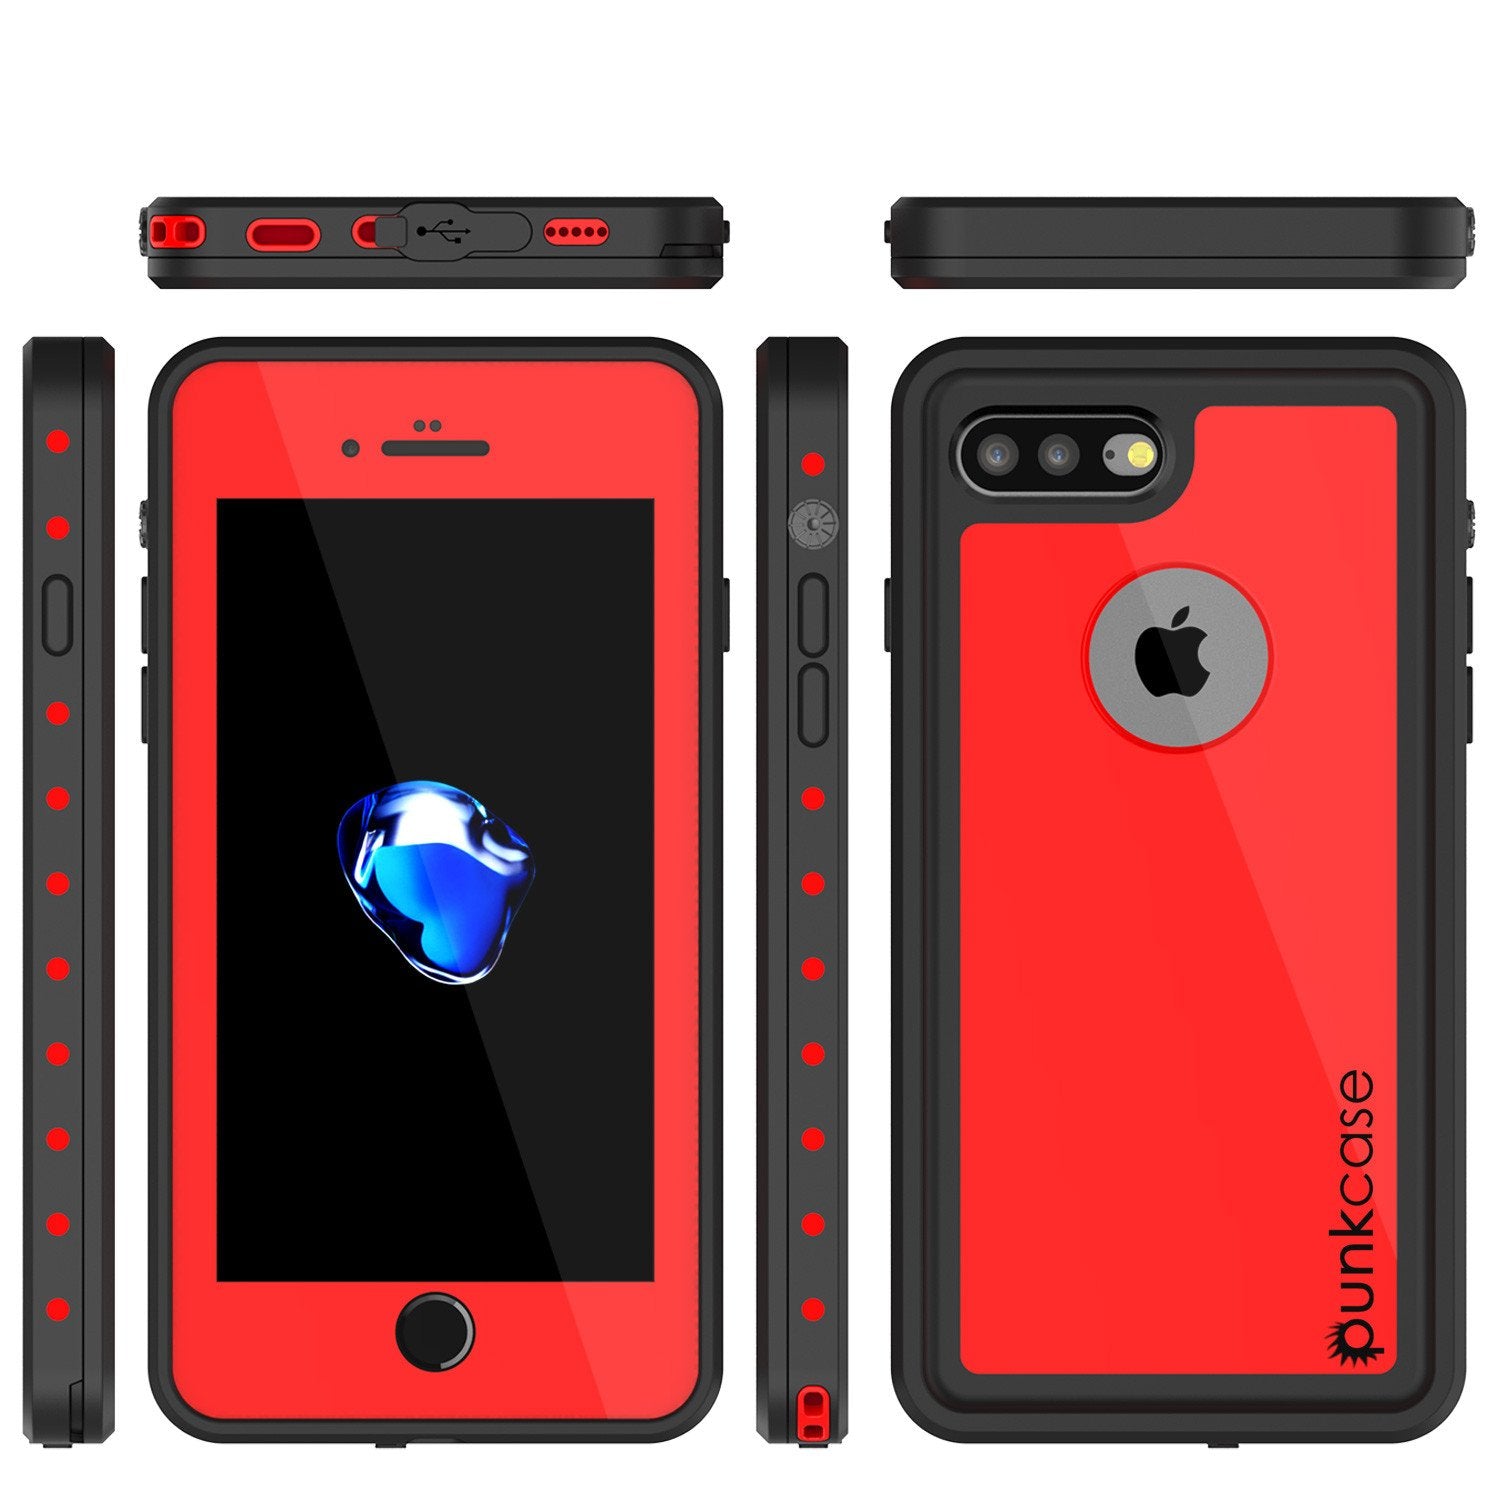 Red iPhone 8 Plus Case  Punkcase iPhone 8 Plus - Waterproof